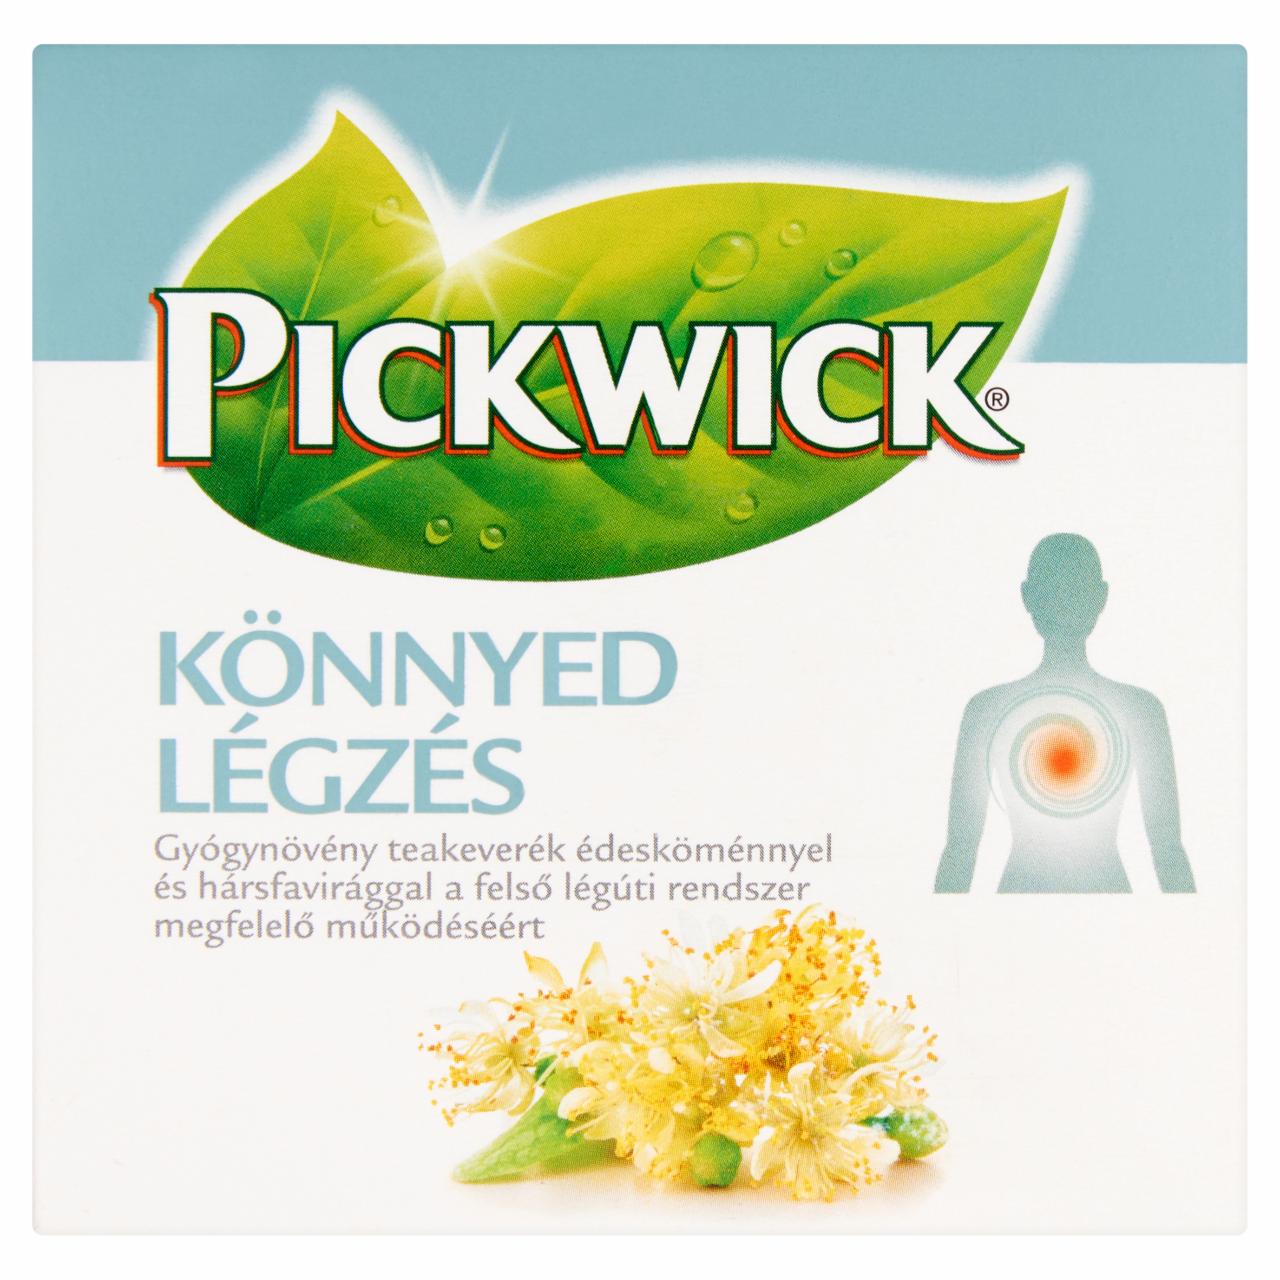 Képek - Pickwick Könnyed Légzés gyógynövény teakeverék 10 filter 22 g